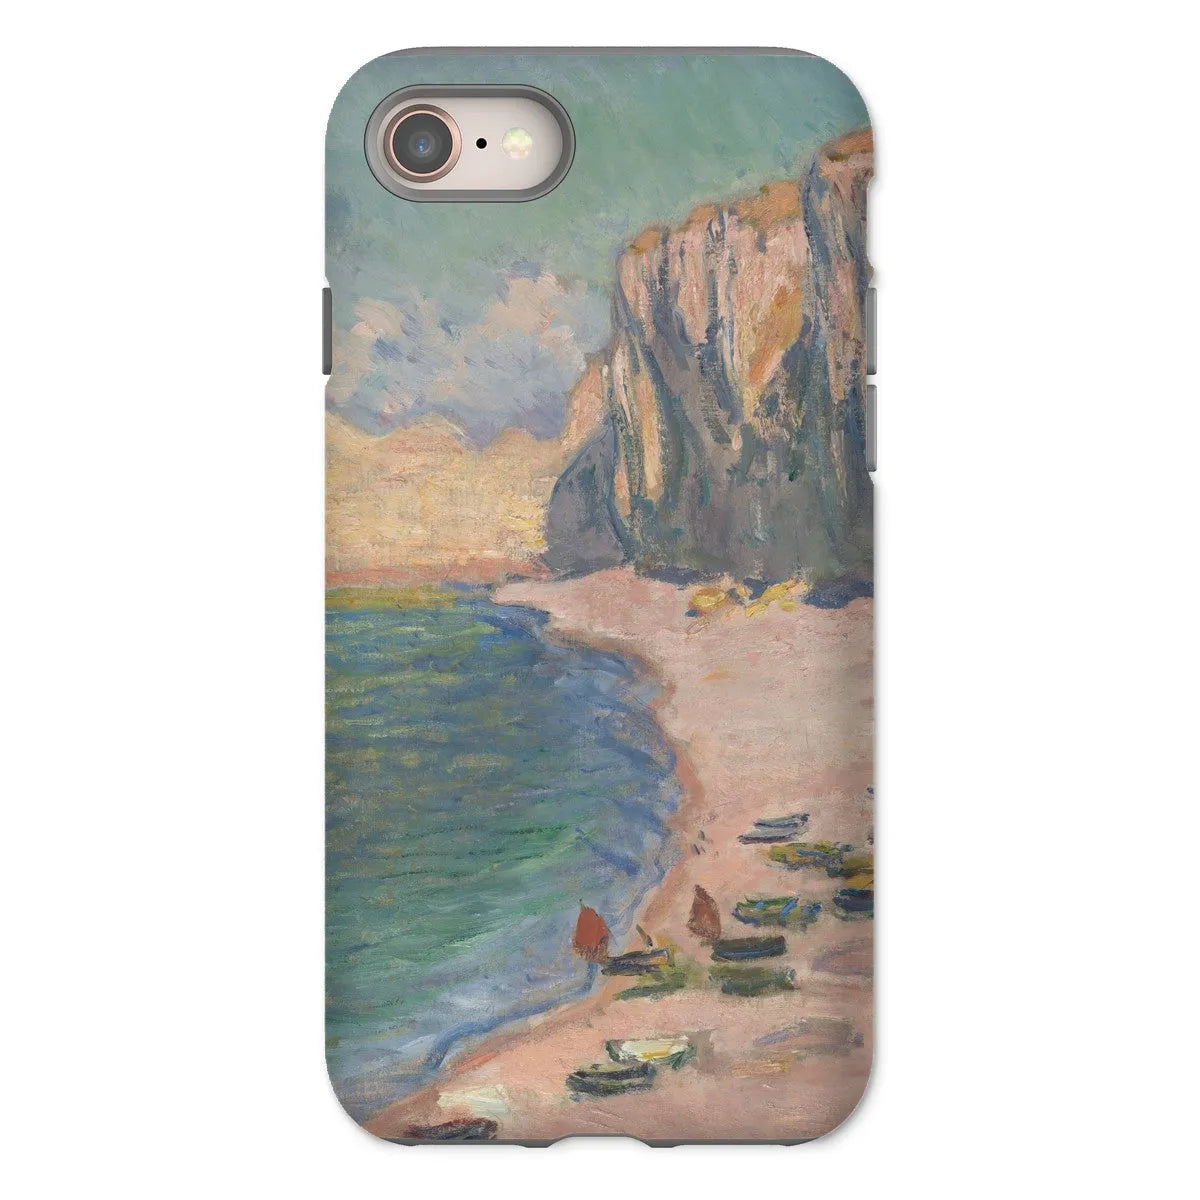 étretat - Impressionist Art Phone Case - Claude Monet - Iphone 8 / Matte - Mobile Phone Cases - Aesthetic Art